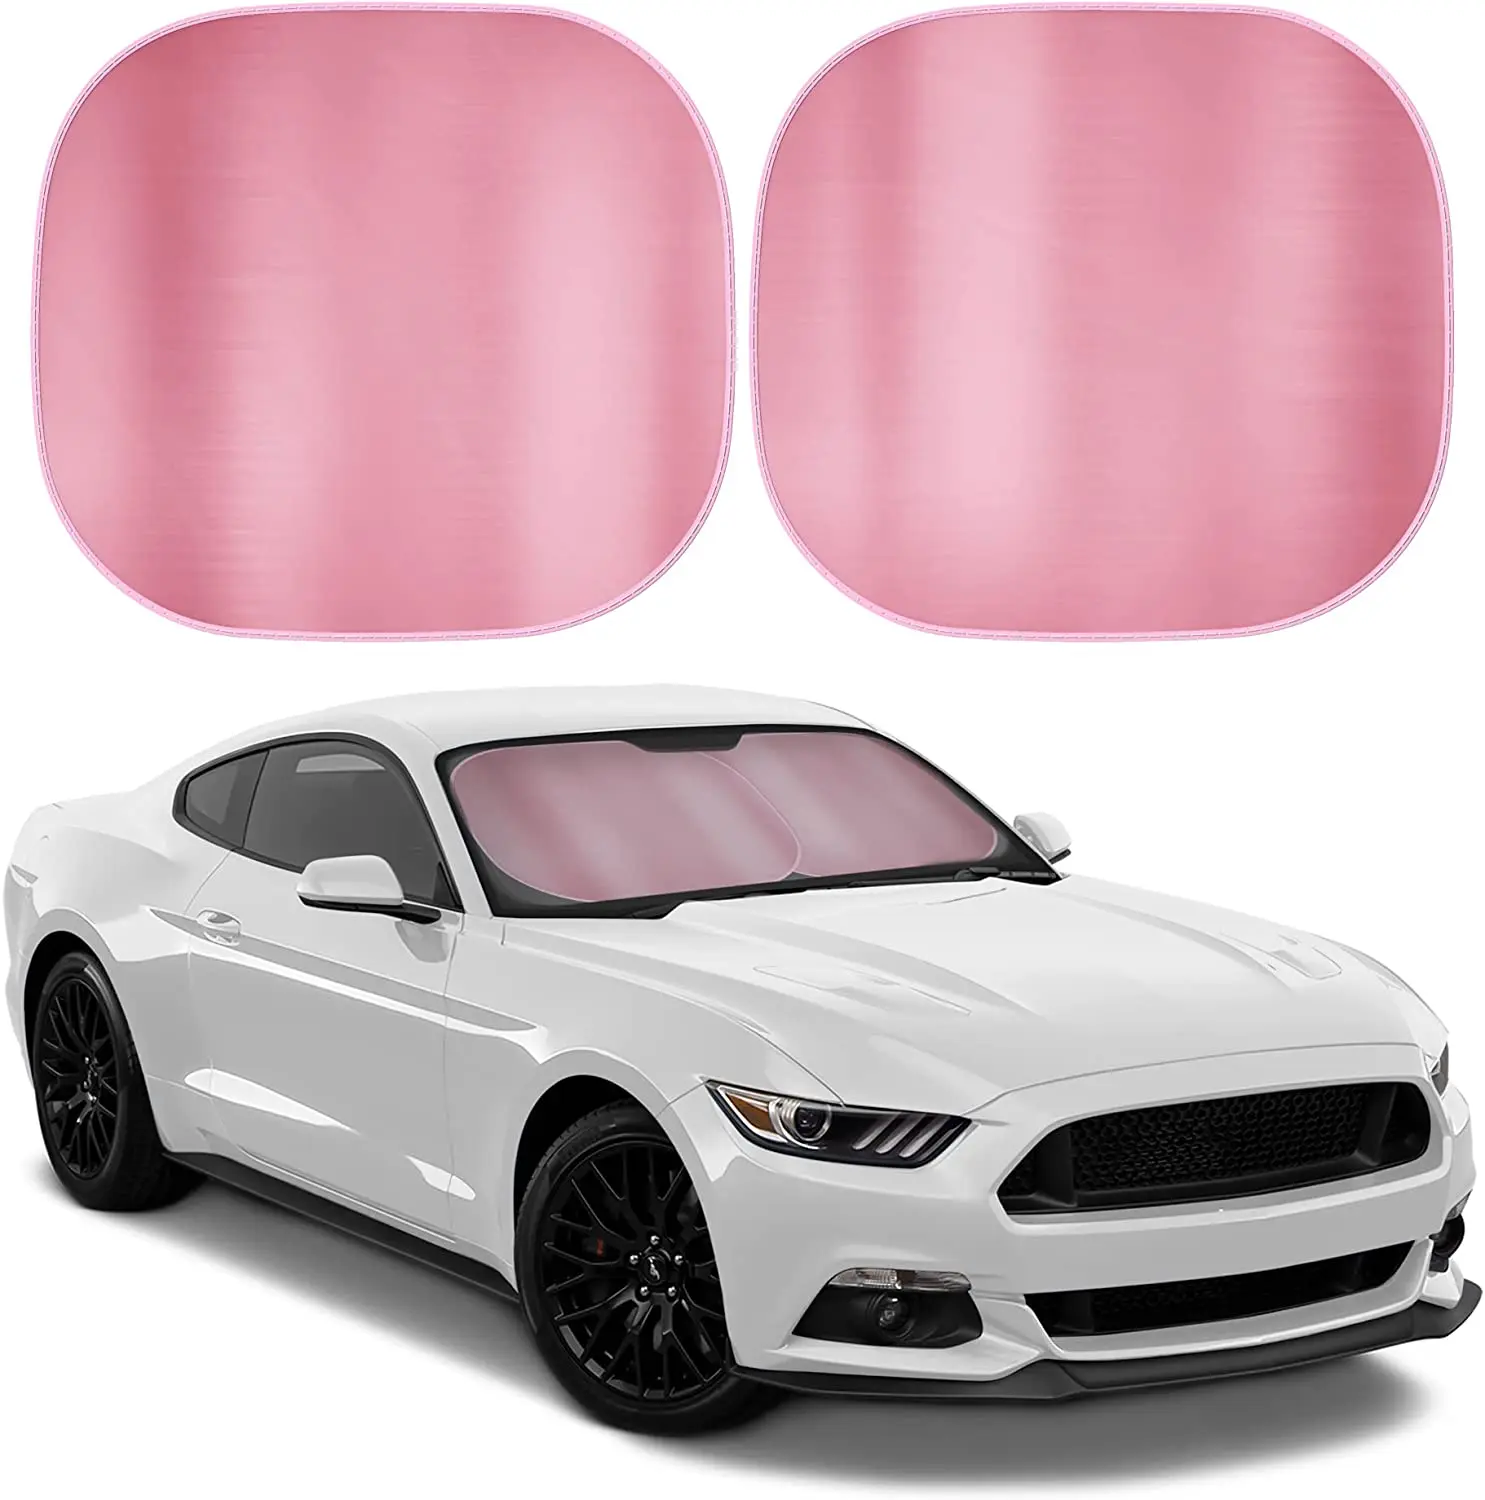 

BDK 2PC Metallic Pink Car Window Sun Shade Auto Shade for Windshield Visor, Block UV Reflect Heat to Keep Your Car SUV Truck, 31